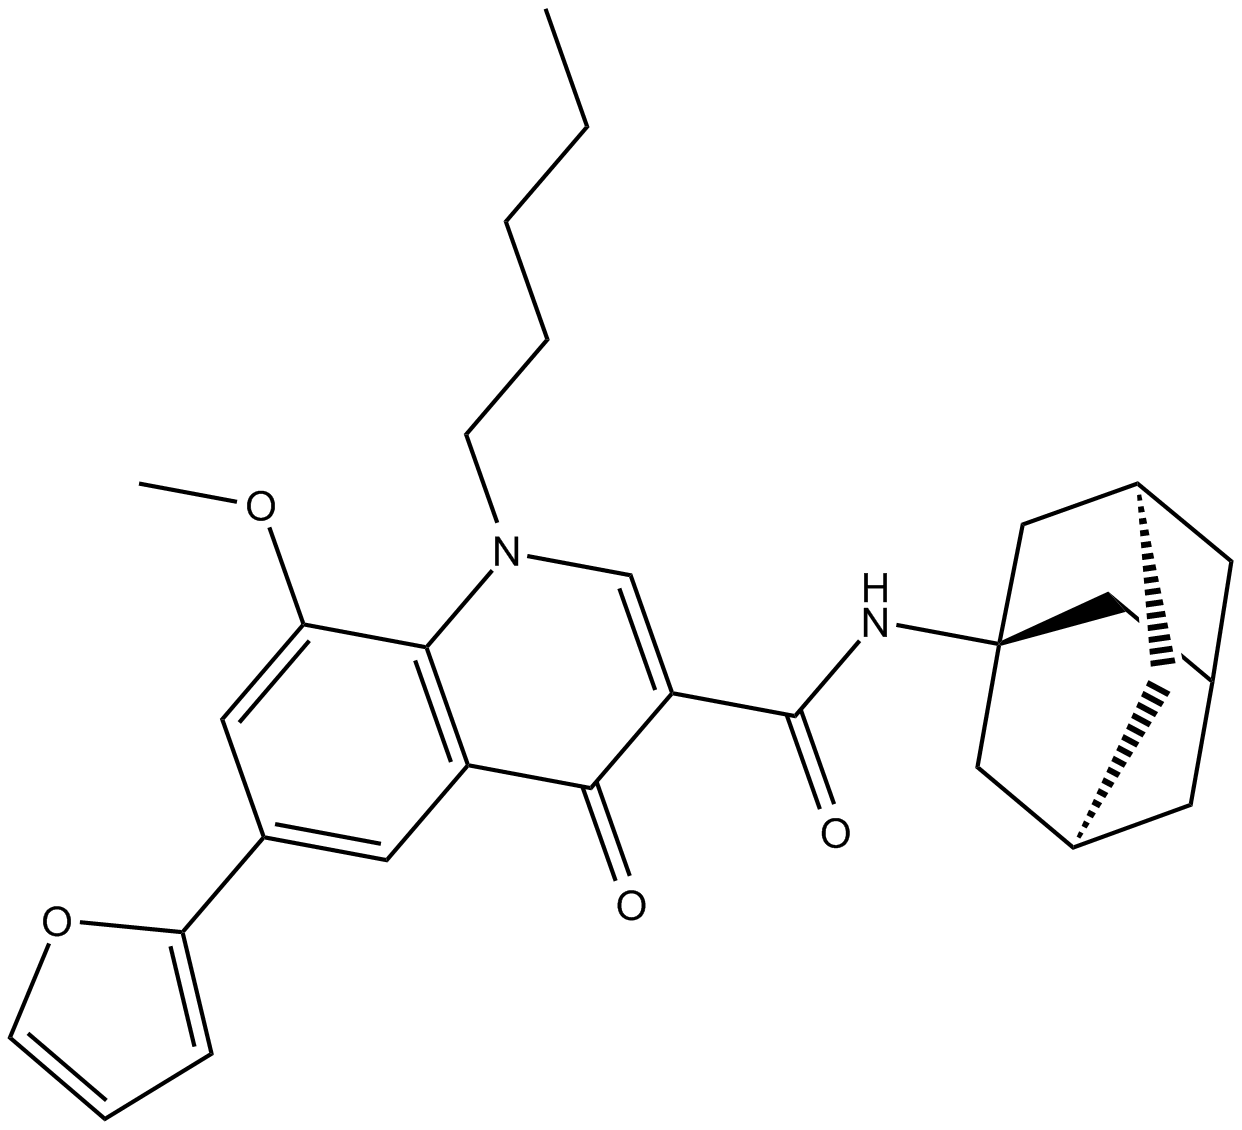 4-Quinolone-3-Carboxamide Furan CB2 Agonist  Chemical Structure